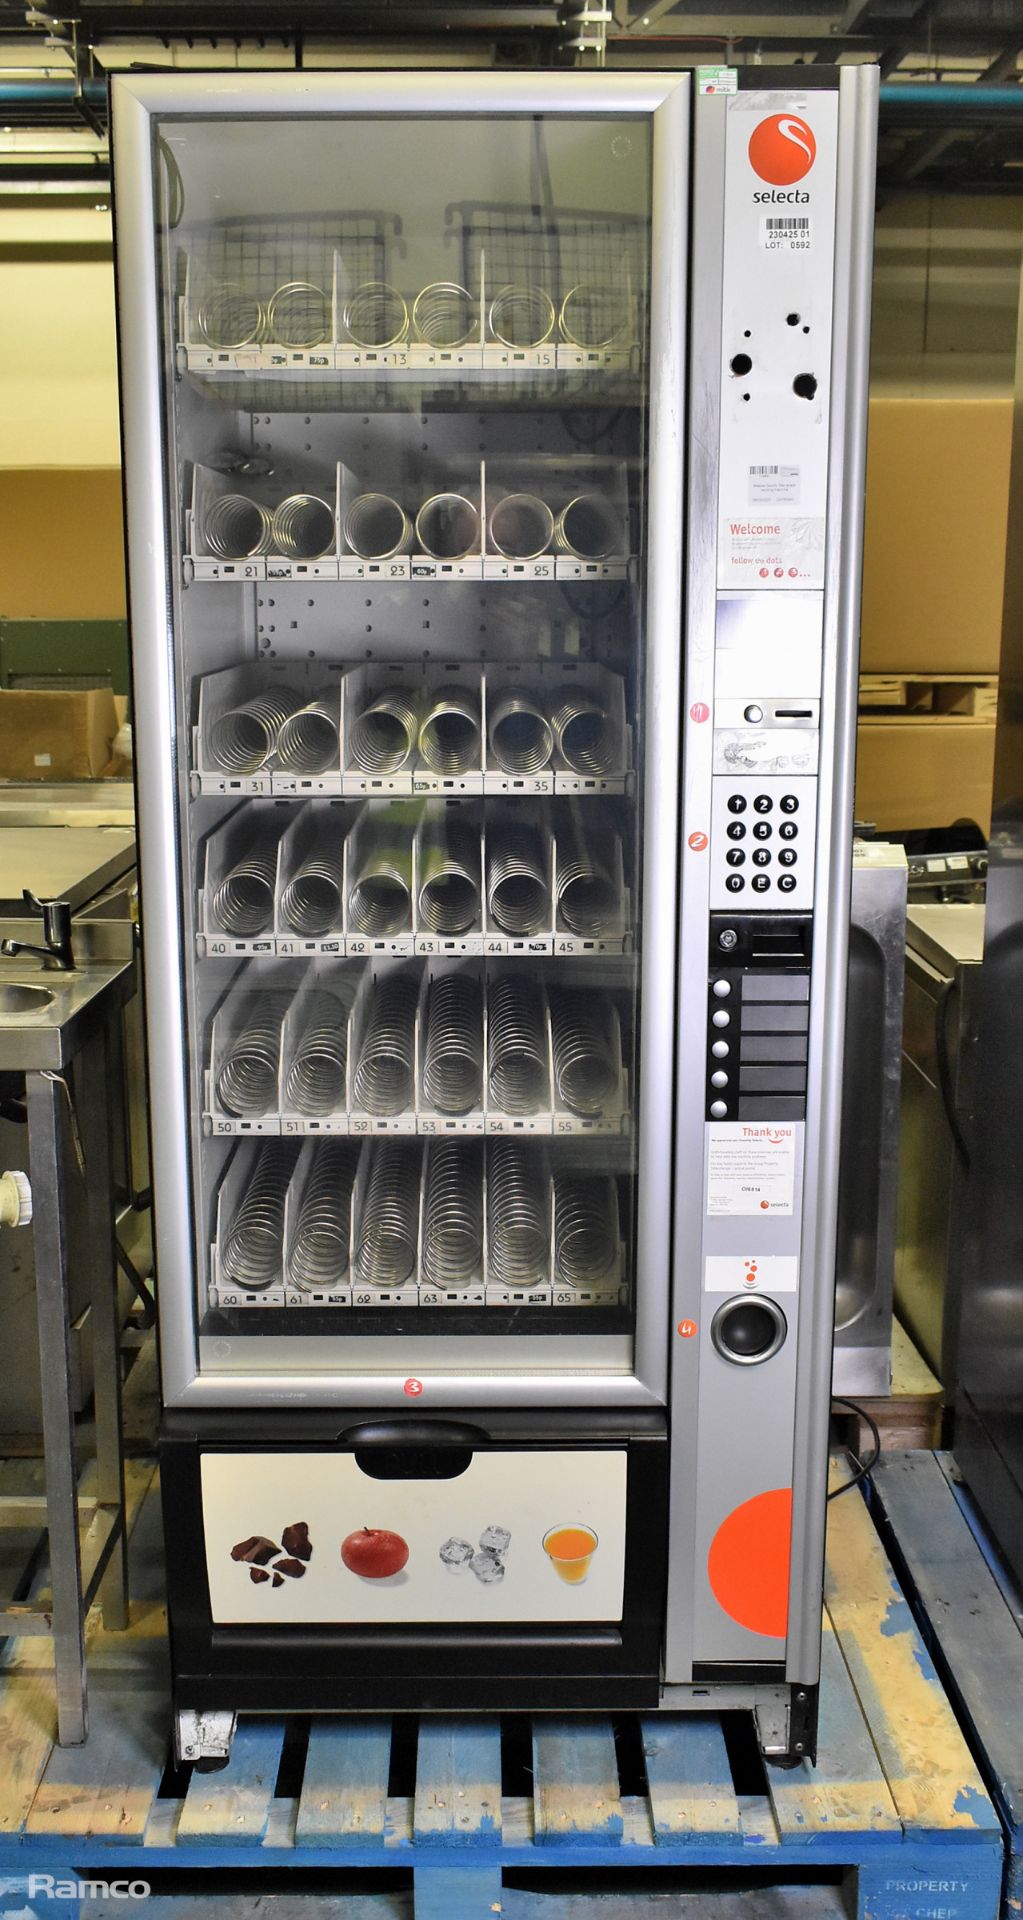 Selecta Toronto Max snack vending machine - NO KEYS